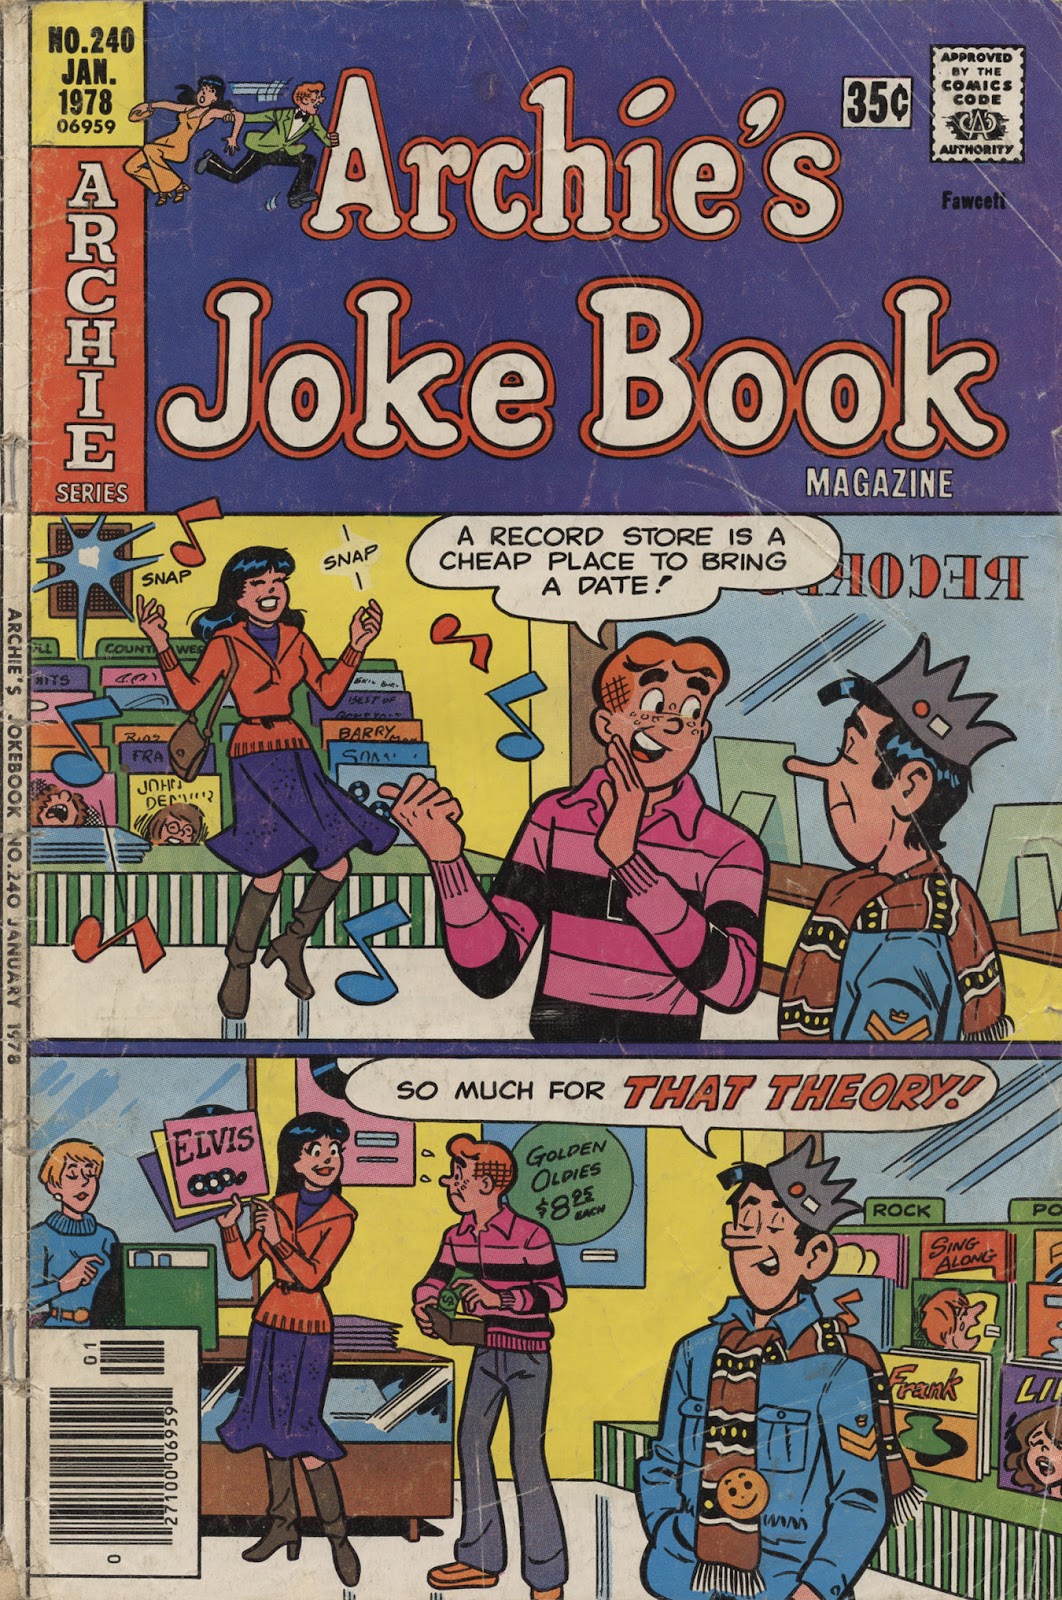 Archie's Joke Book Magazine issue 240 - Page 1